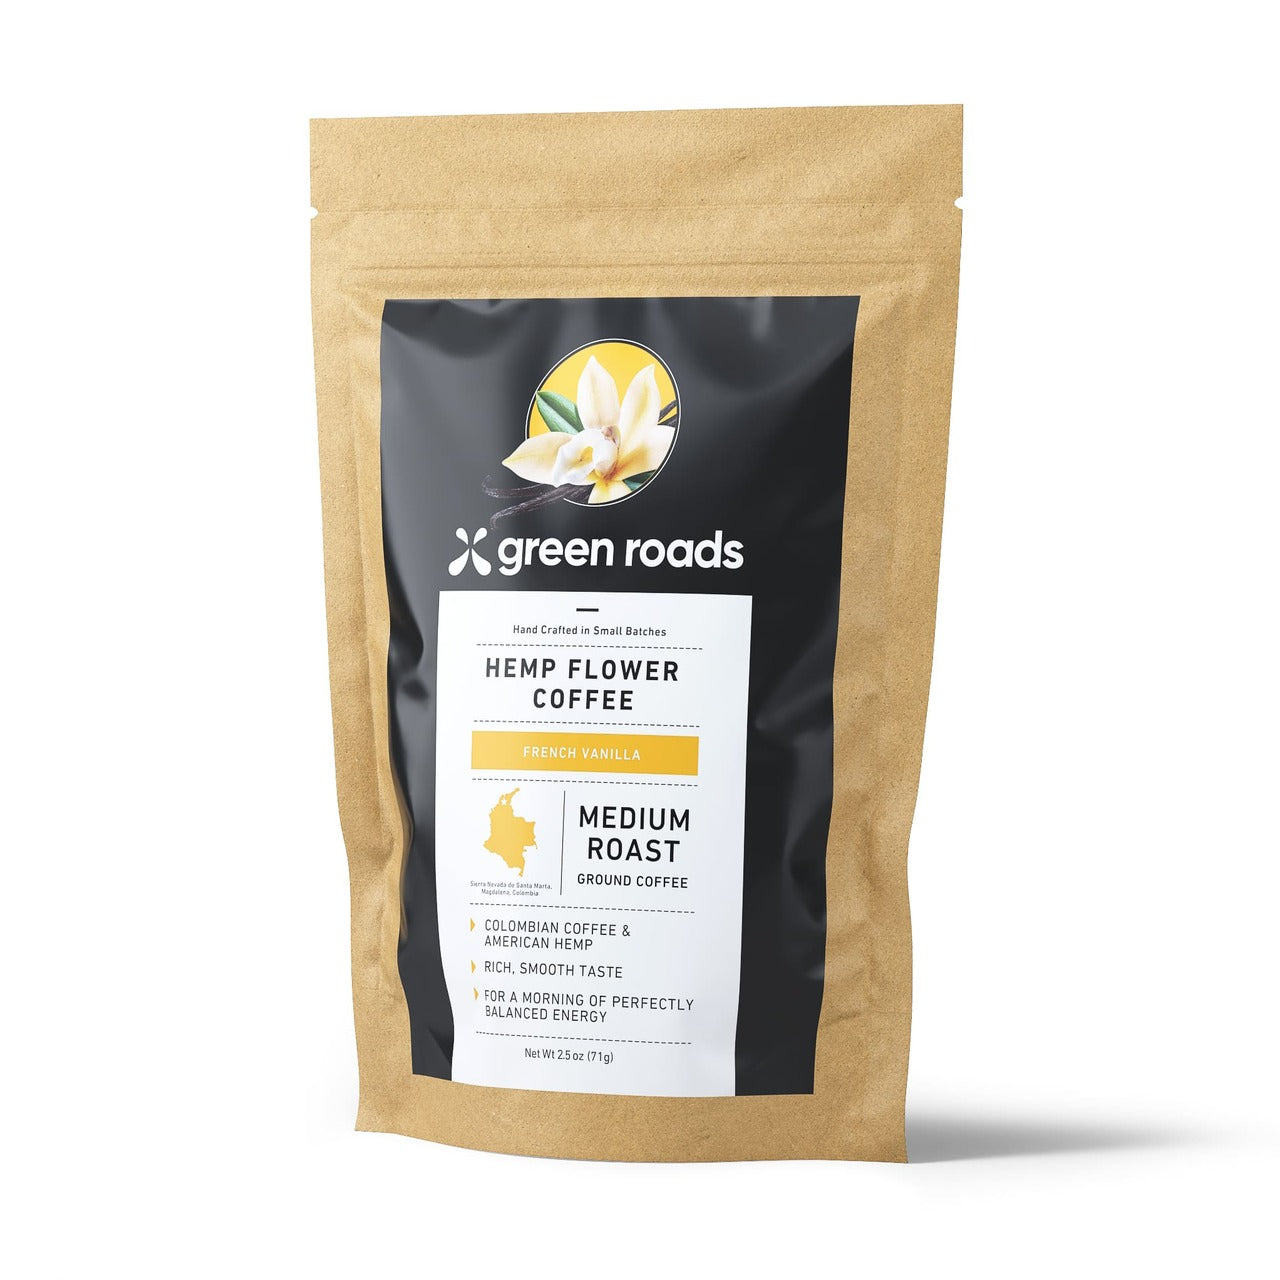 Hemp CBD Coffee - Medium Roast French Vanilla Hemp Flower Coffee 2.5 oz bag